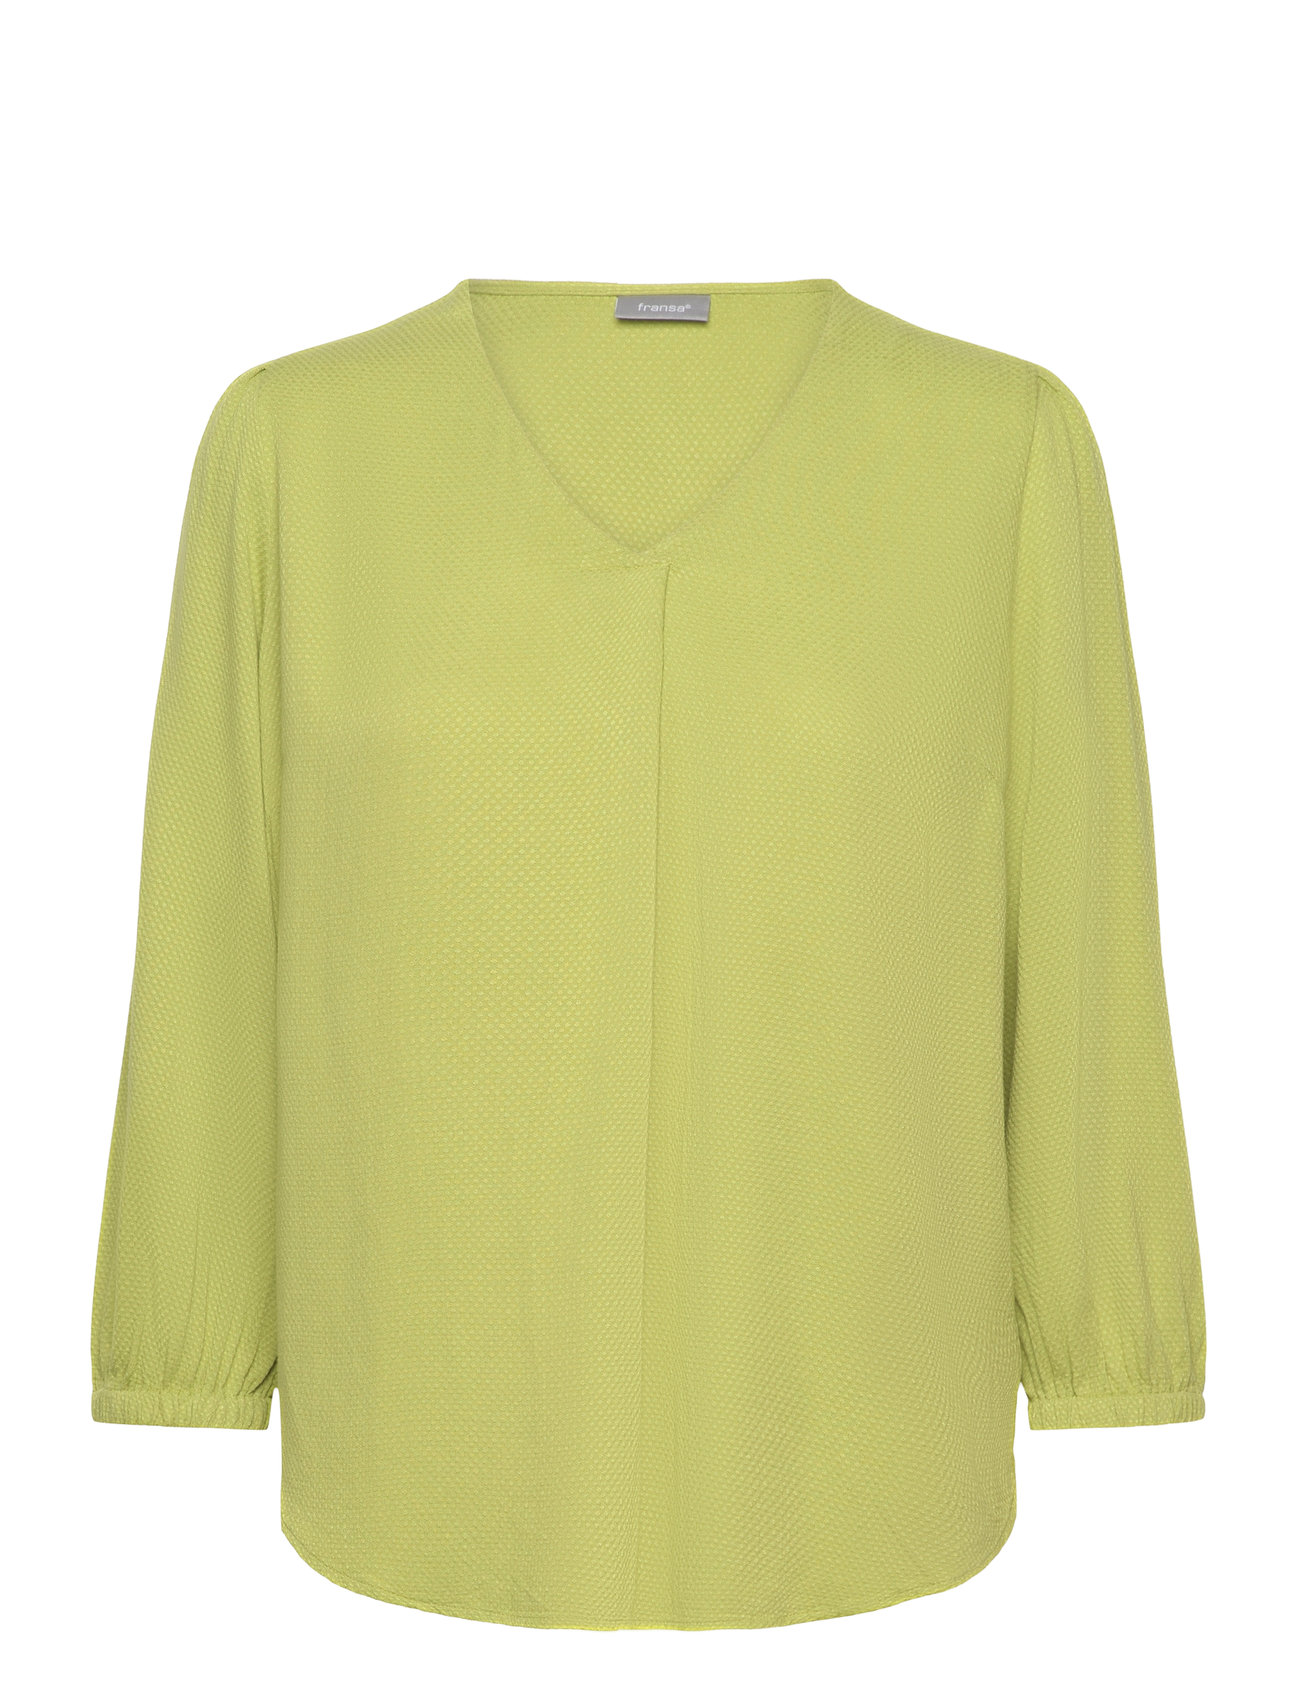 blouses – Bl Frhaide 1 – at shop Booztlet Fransa & shirts